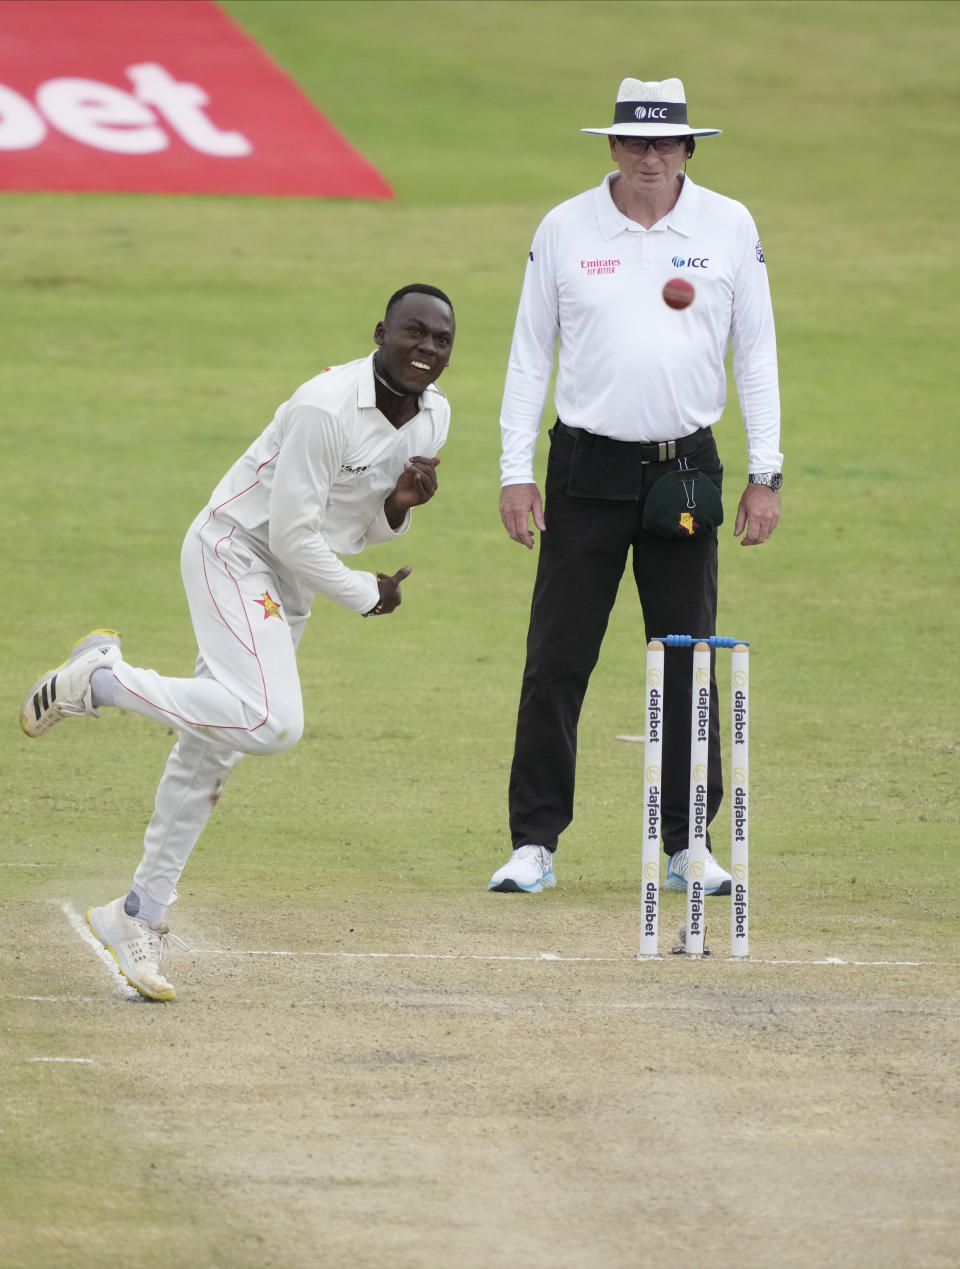 Zimbabwe bowler Brandon Mavuta in action on the first day of the second Test Cricket match between Zimbabwe and West Indies at Queens Sports Club in Bulawayo, Zimbabwe, Sunday, Feb. 12, 2023. (AP Photo/Tsvangirayi Mukwazhi)